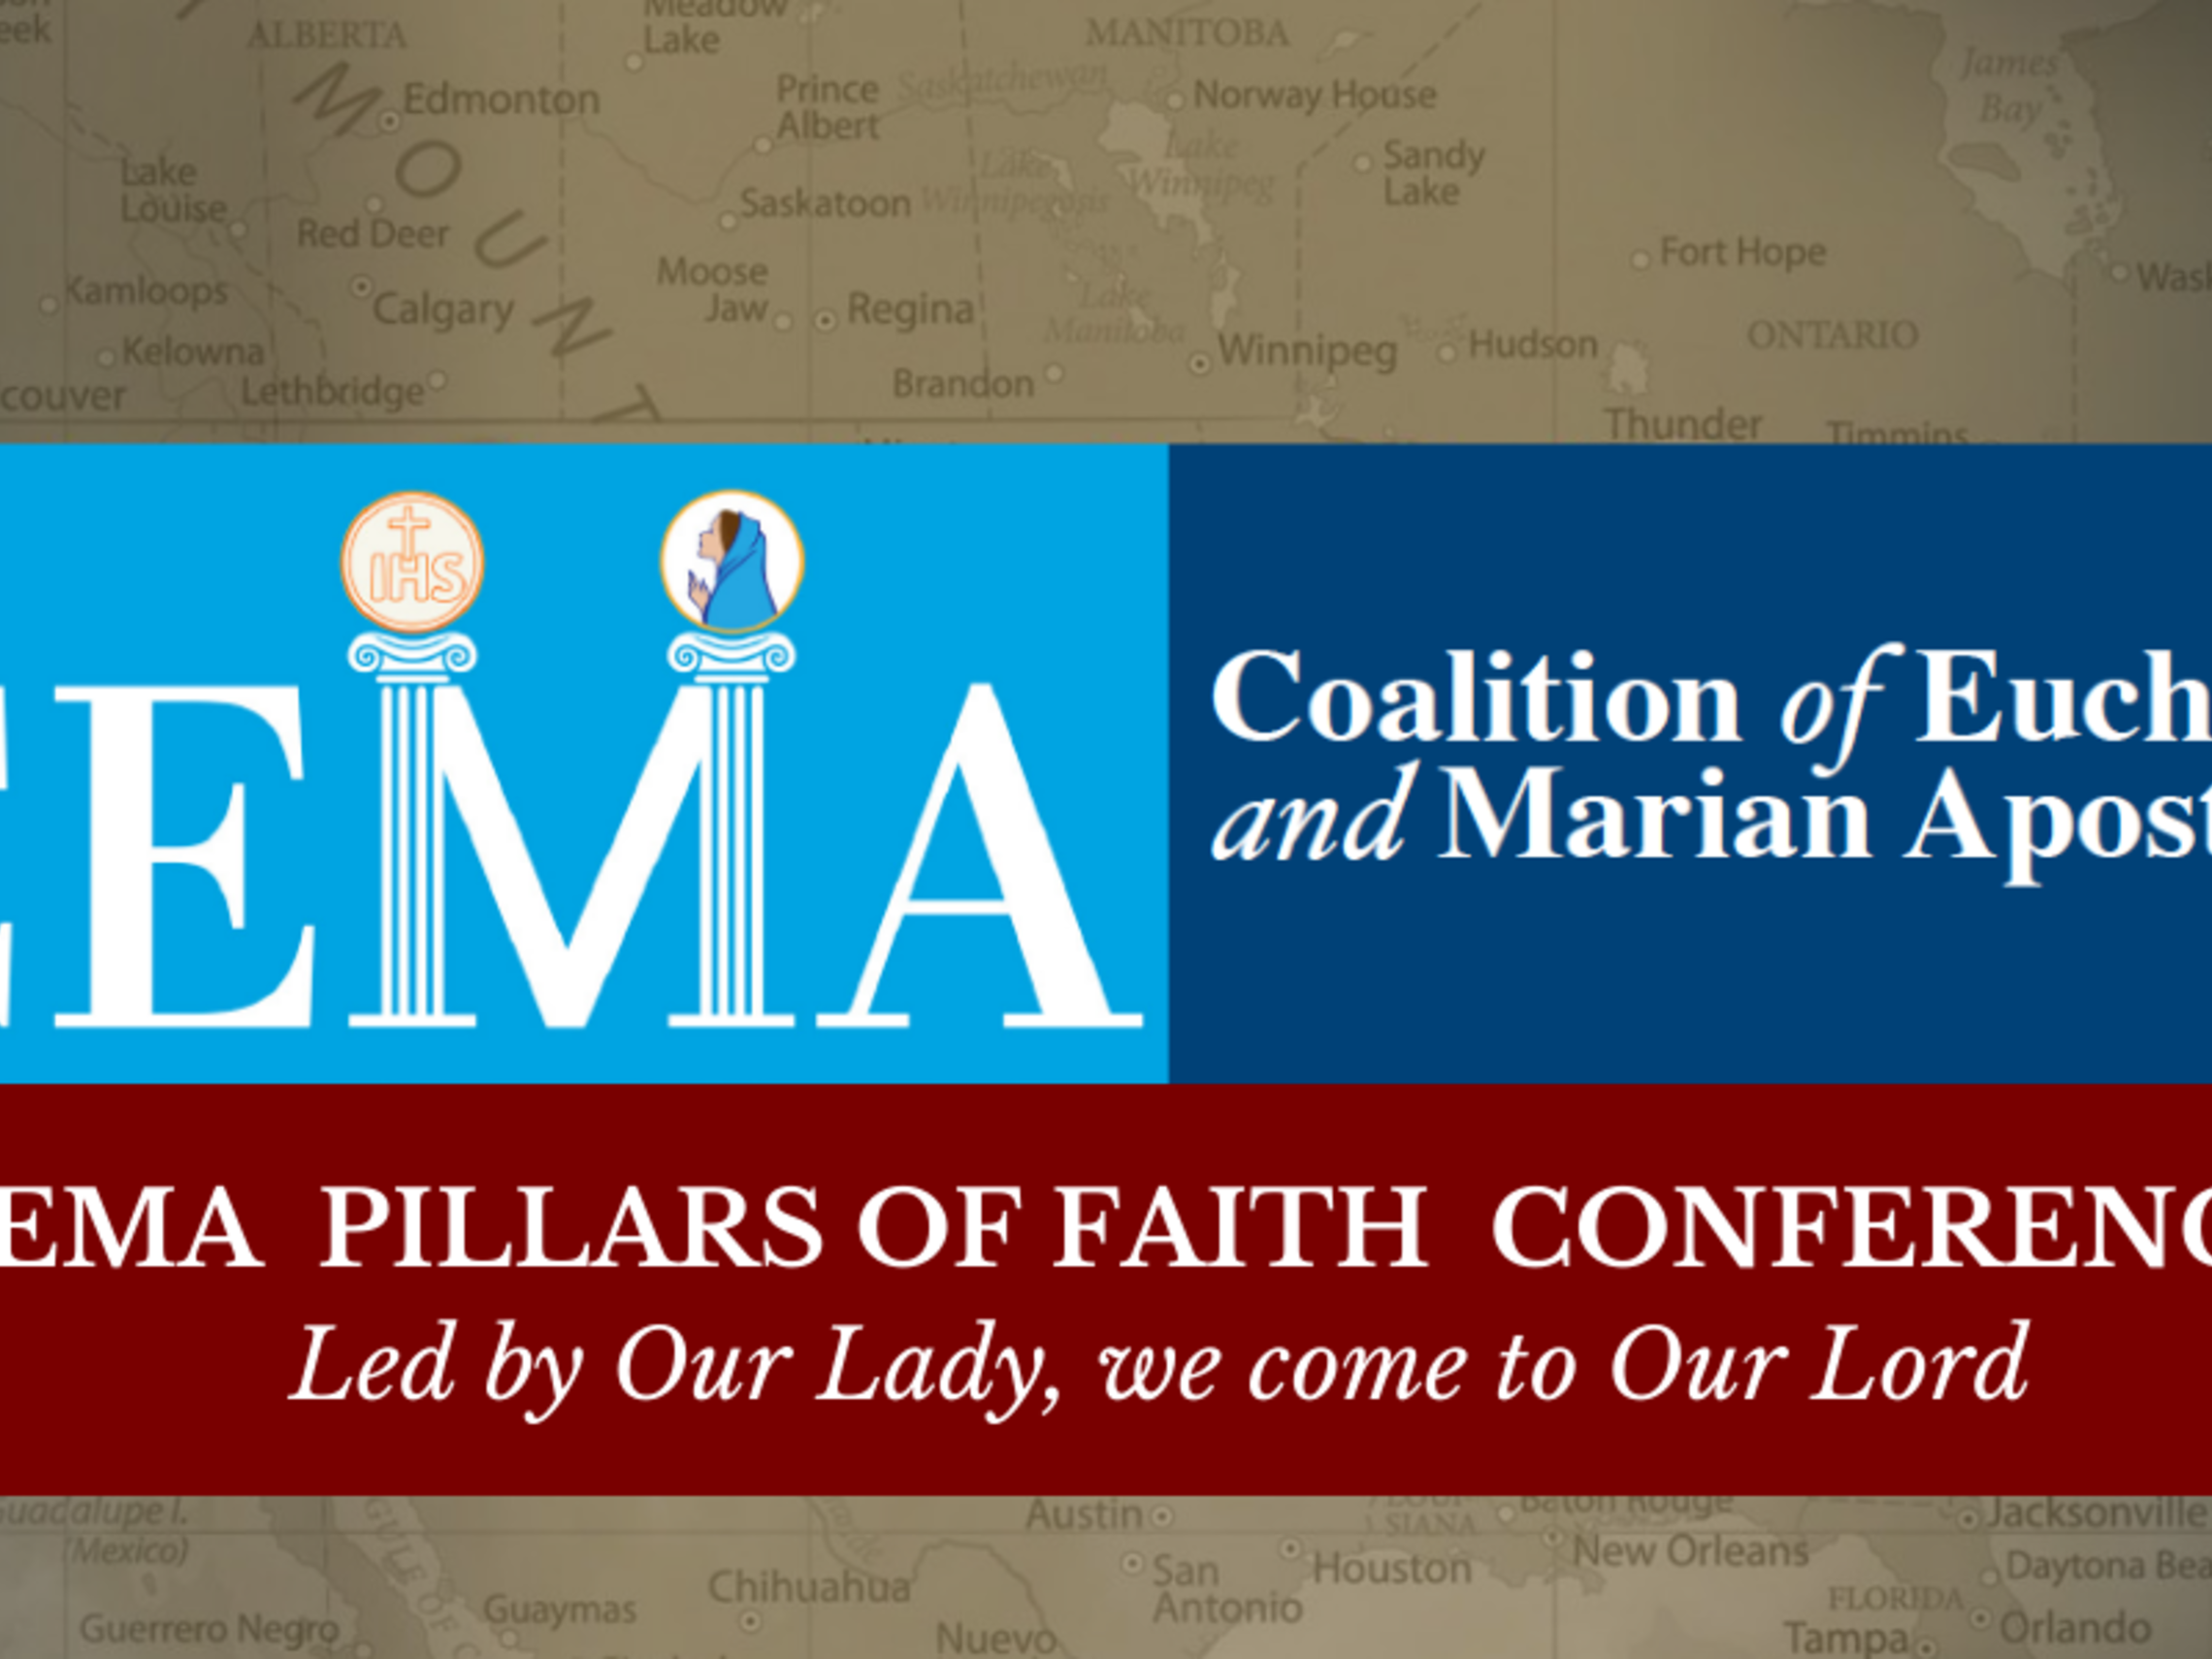 CEMA PILLARS OF FAITH CONFERENCE